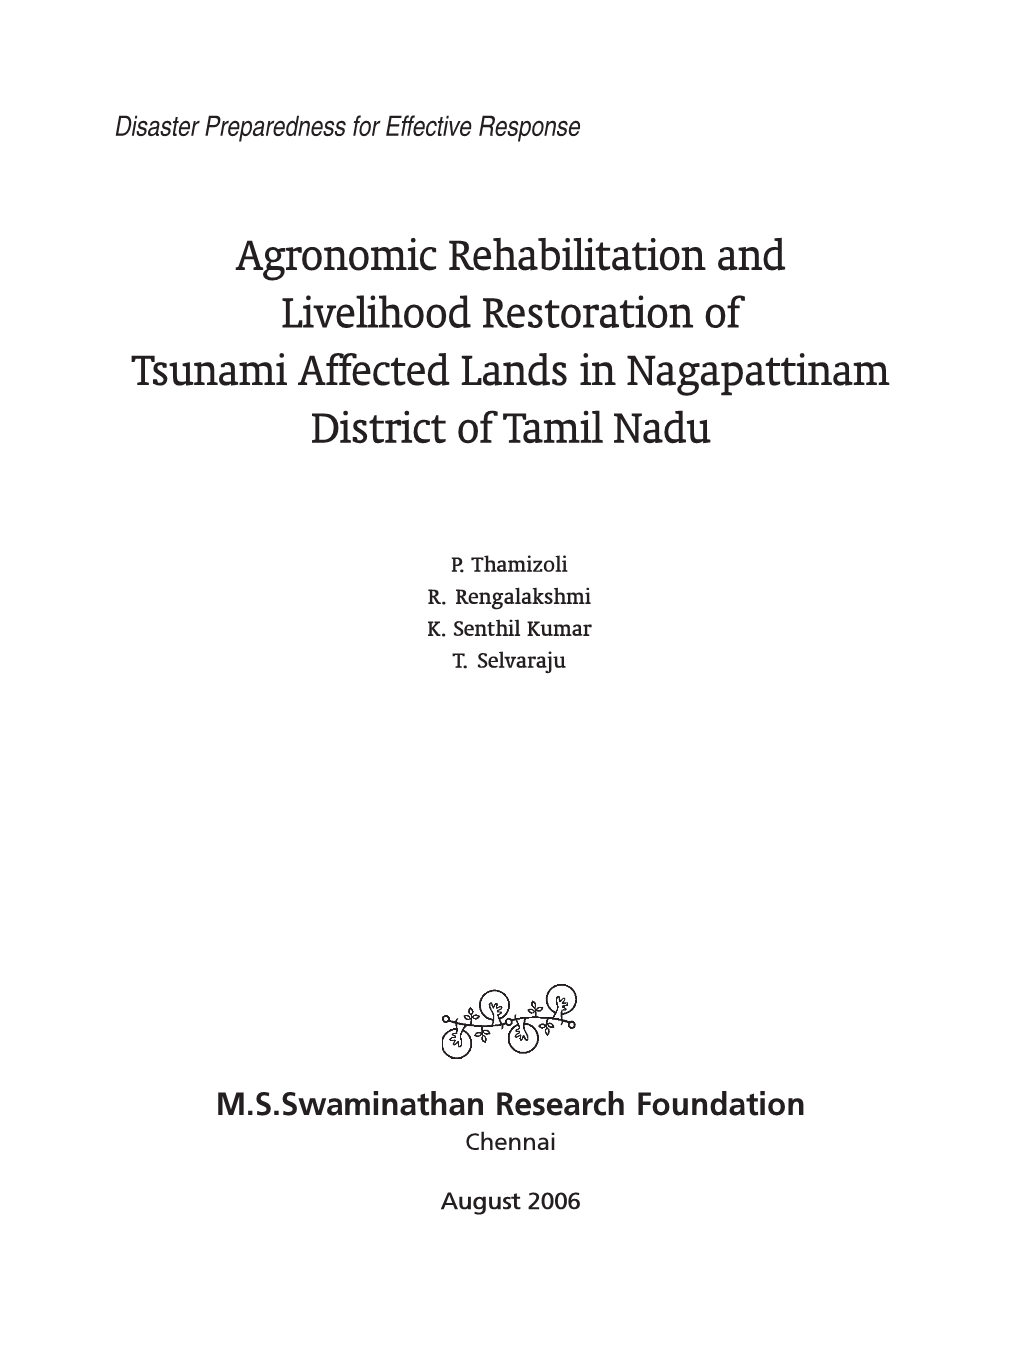 Agronomic Rehabilitation and Livelihood Restoration of Tsunami Affected Lands in Nagapattinam District of Tamil Nadu